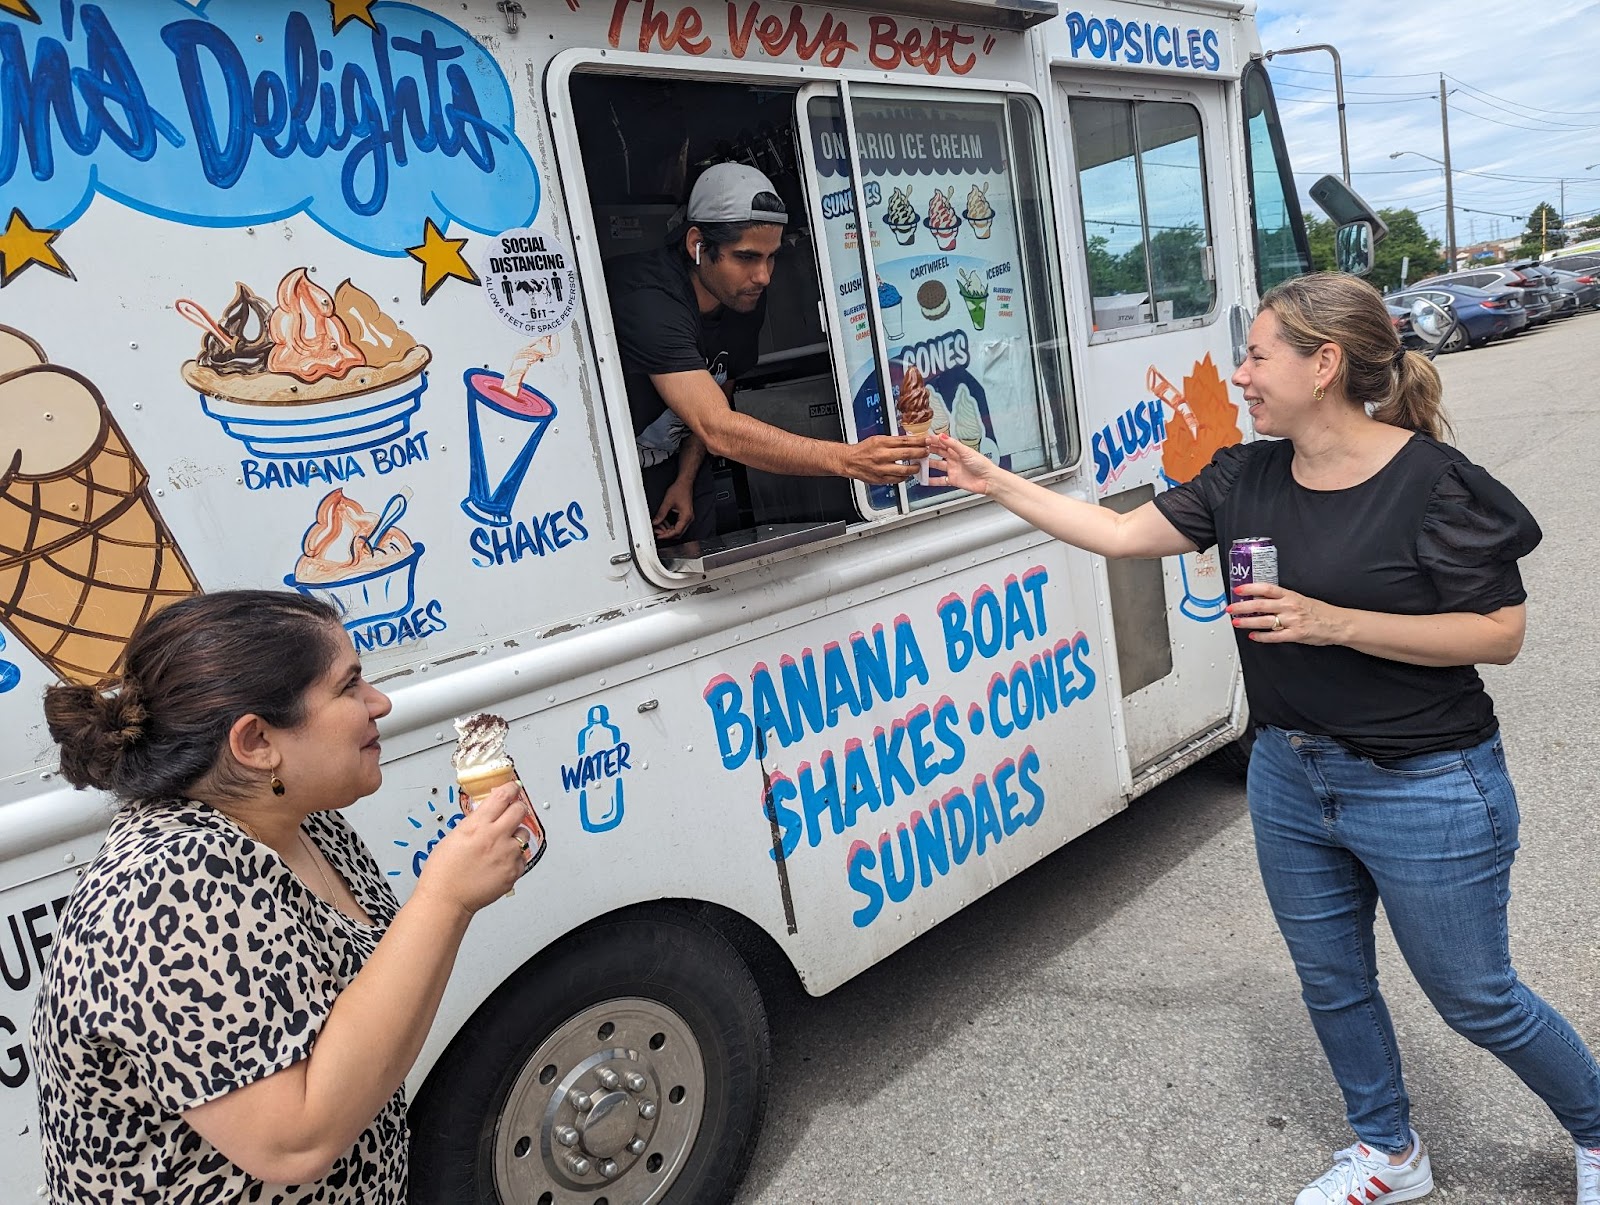 Elite Digital employee grabbing an ice cream cone from an ice cream truck. 